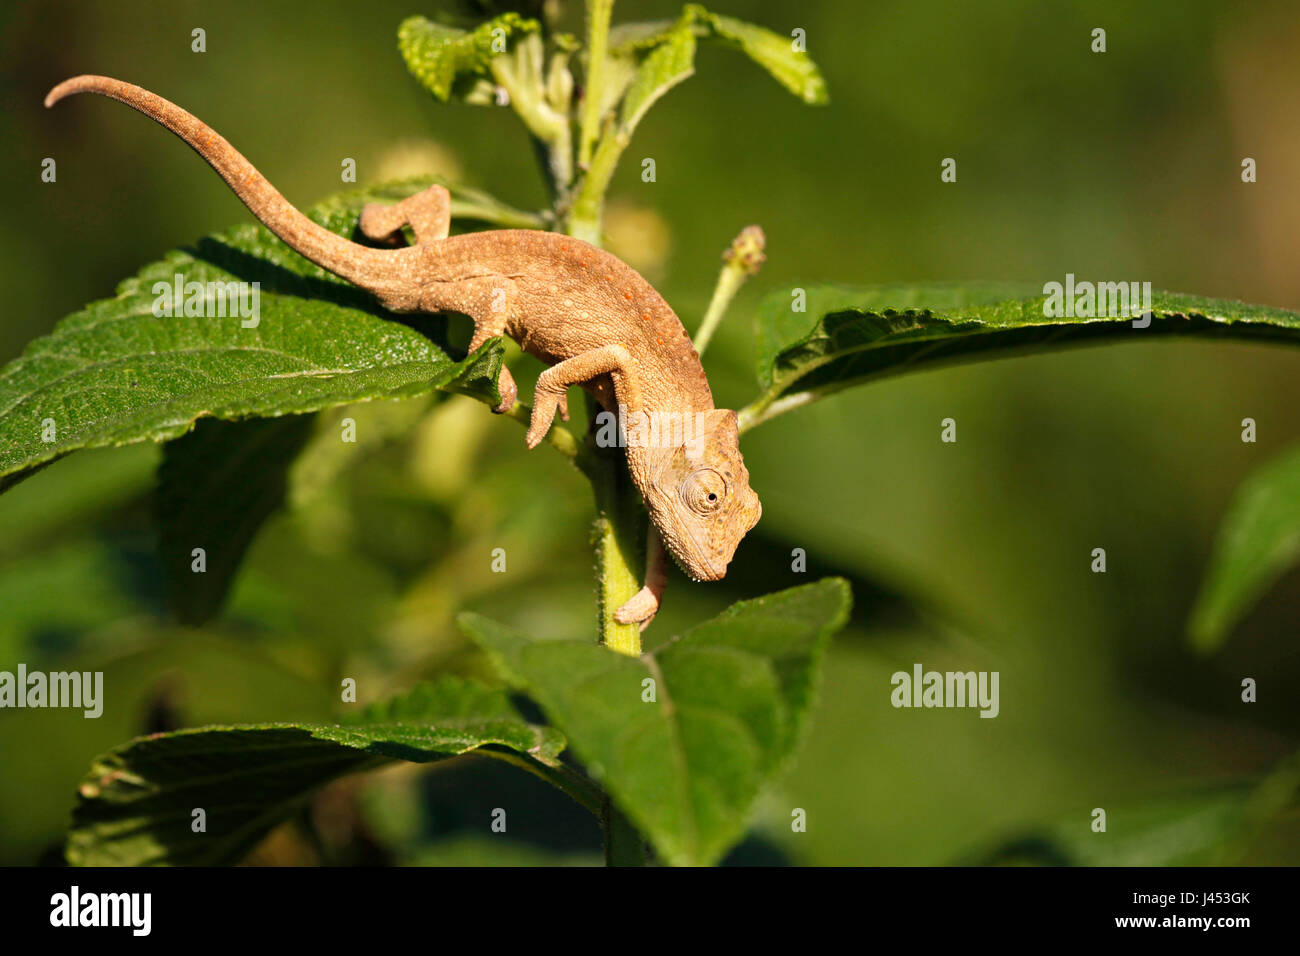 photo of a Setaro's dwarf chameleon climbing through green bushes Stock Photo